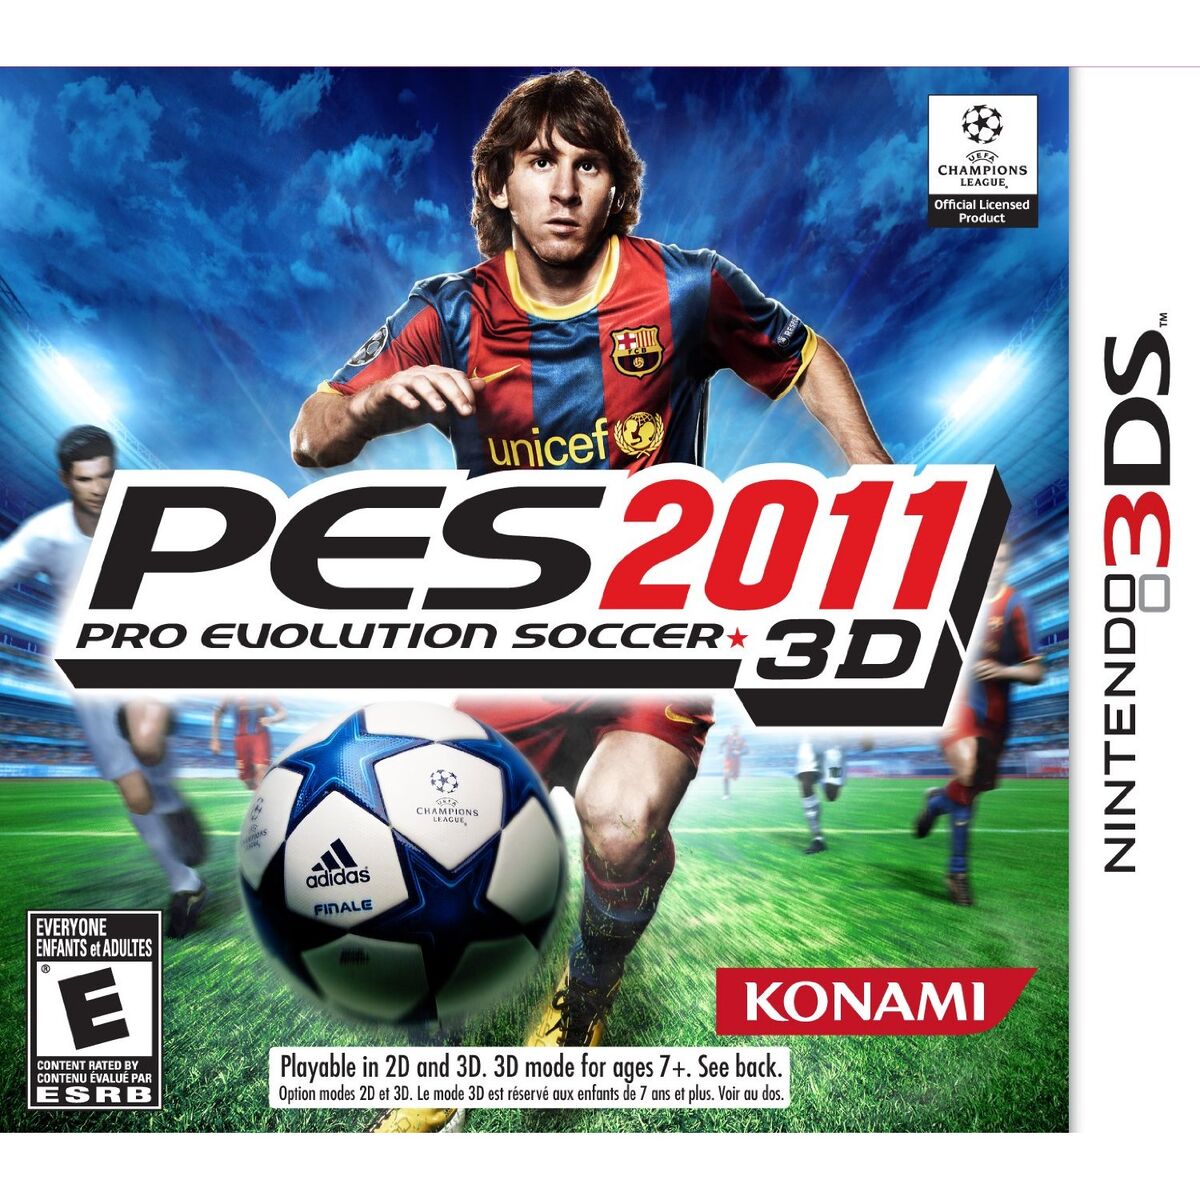 Pro Evolution Soccer 2011 Updated Hands-On Impressions - GameSpot